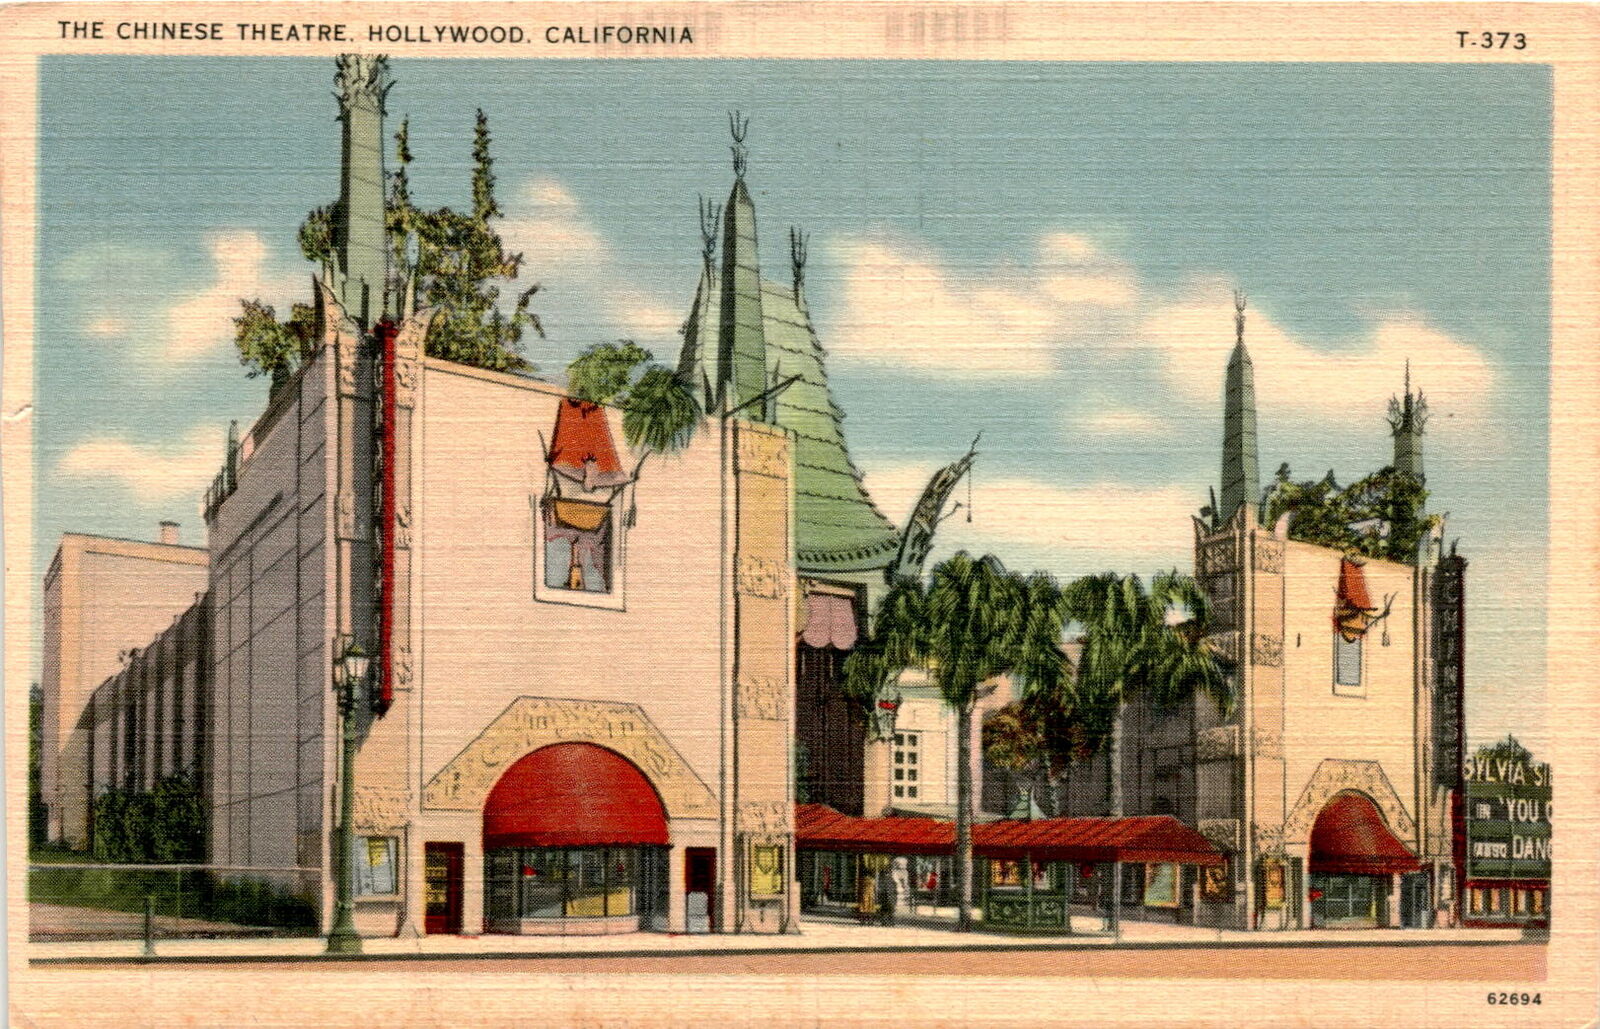 Chinese Theatre, Hollywood, California, Sylvia Si, Caso Dang, Freid, Postcard